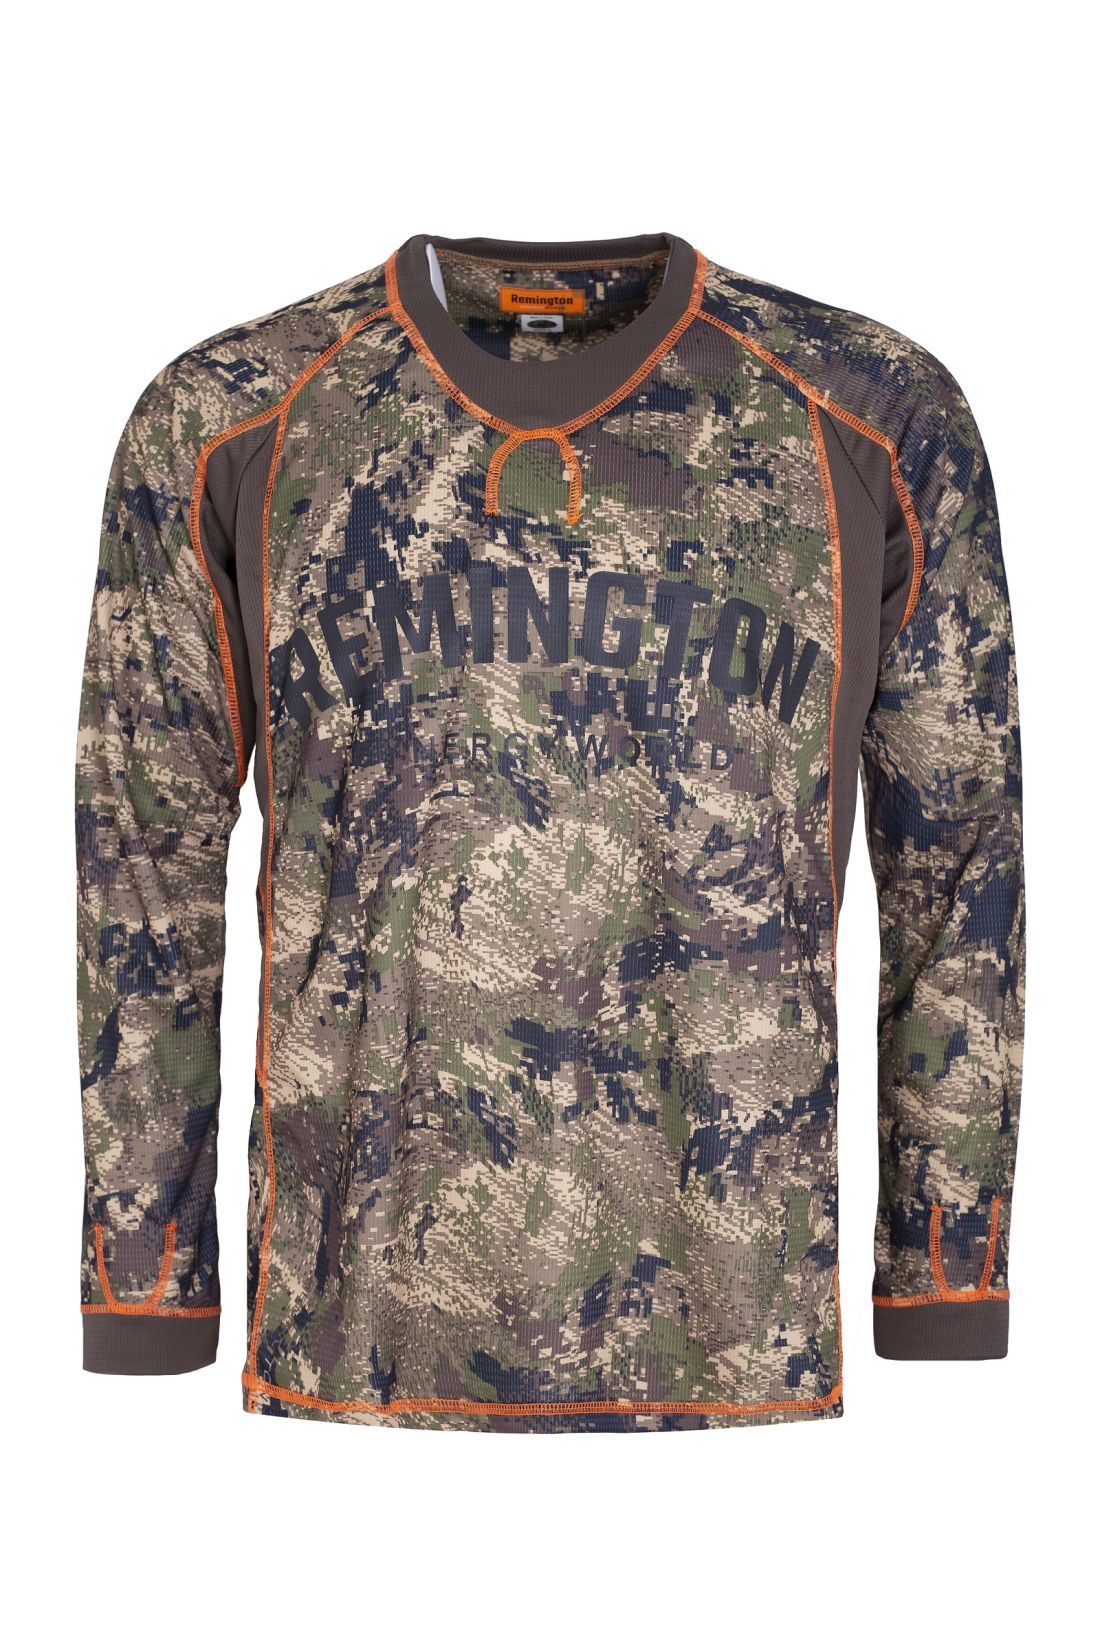 Remington Футболка для активного отдыха Remington Inside Fit Shirt Green Forest